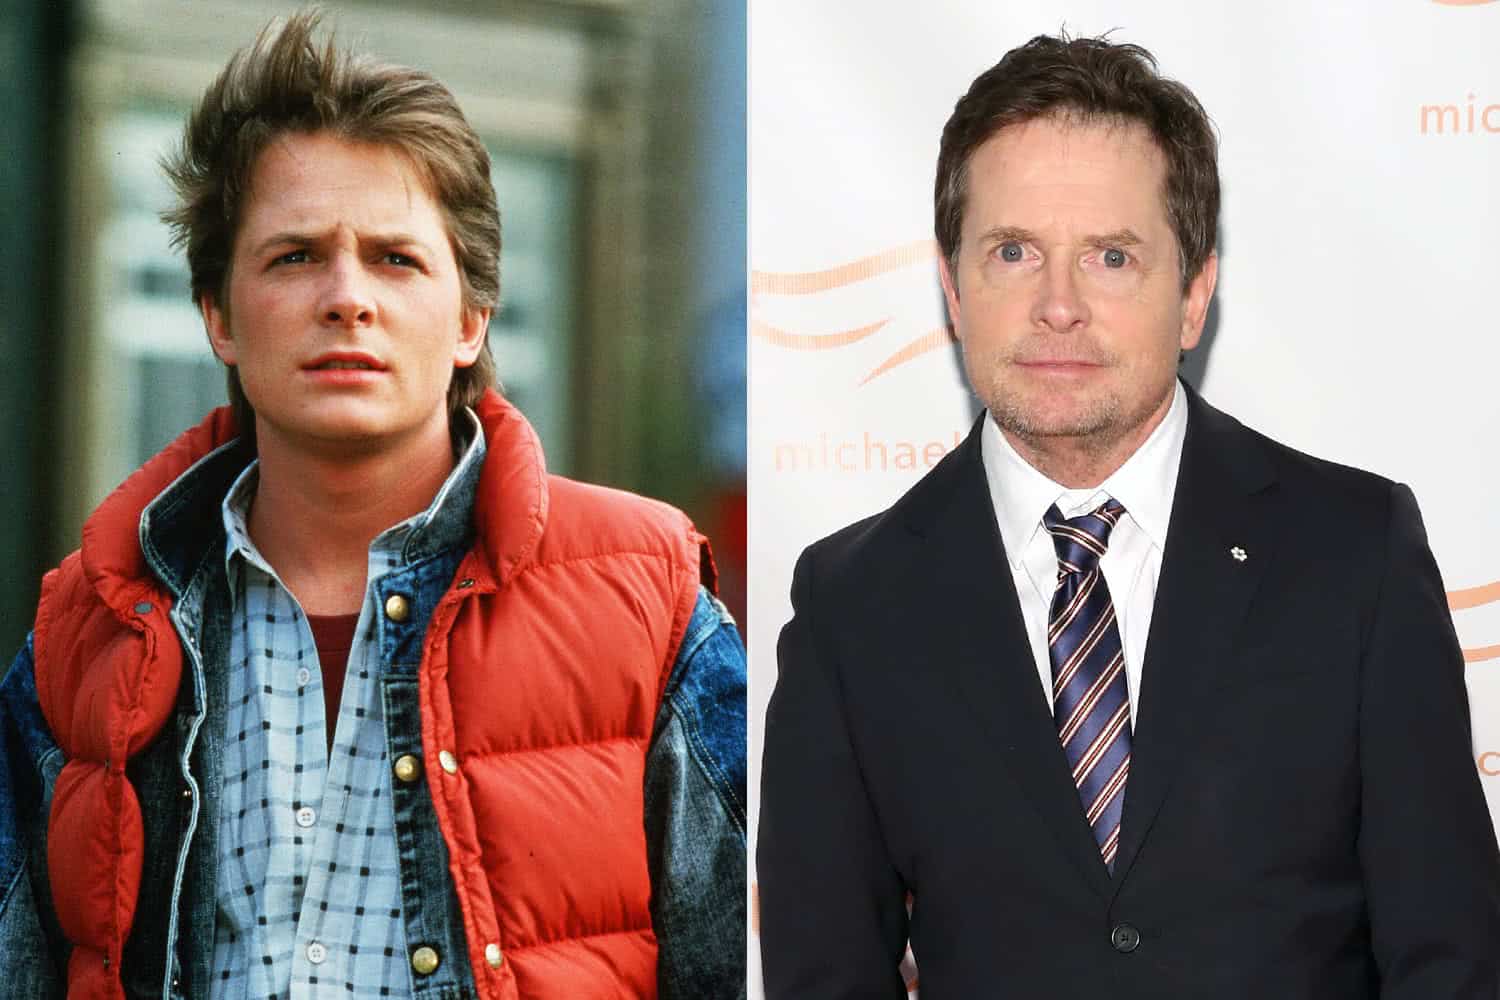 Marty McFly / Michael J. Fox